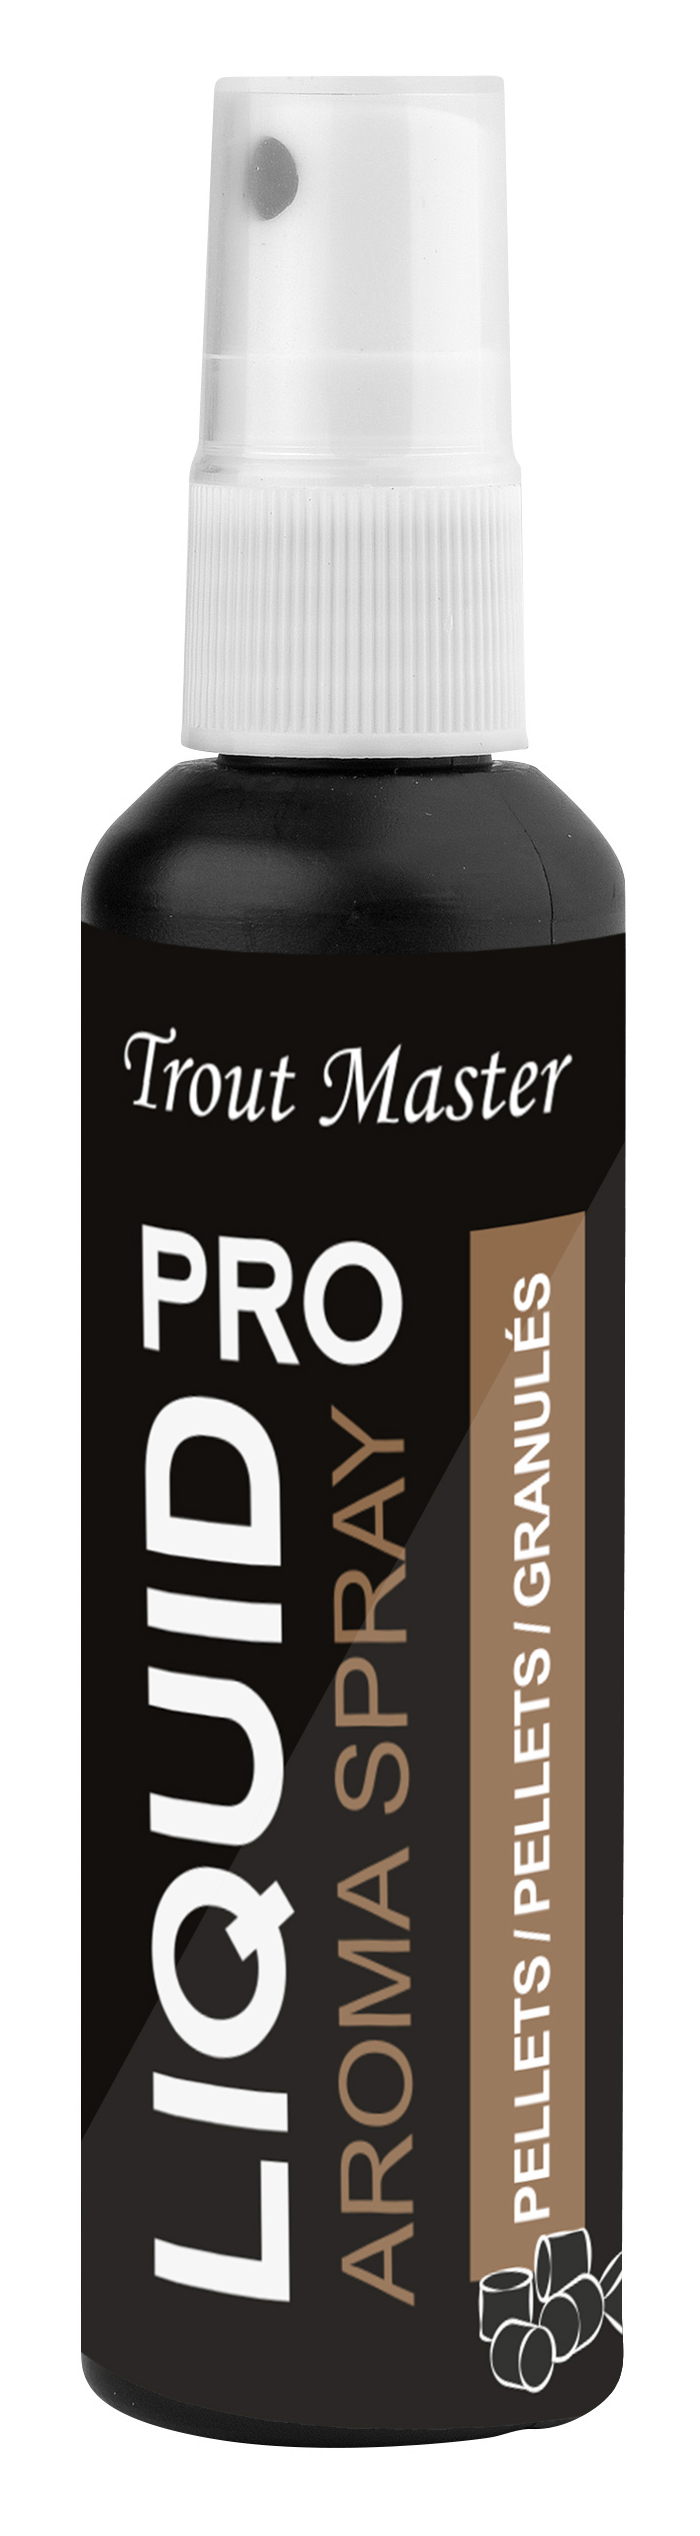 SproTM Trout Master Pro Liquid 50ml Scent Spray Aroma Garlic Fish Pellet  Cheese